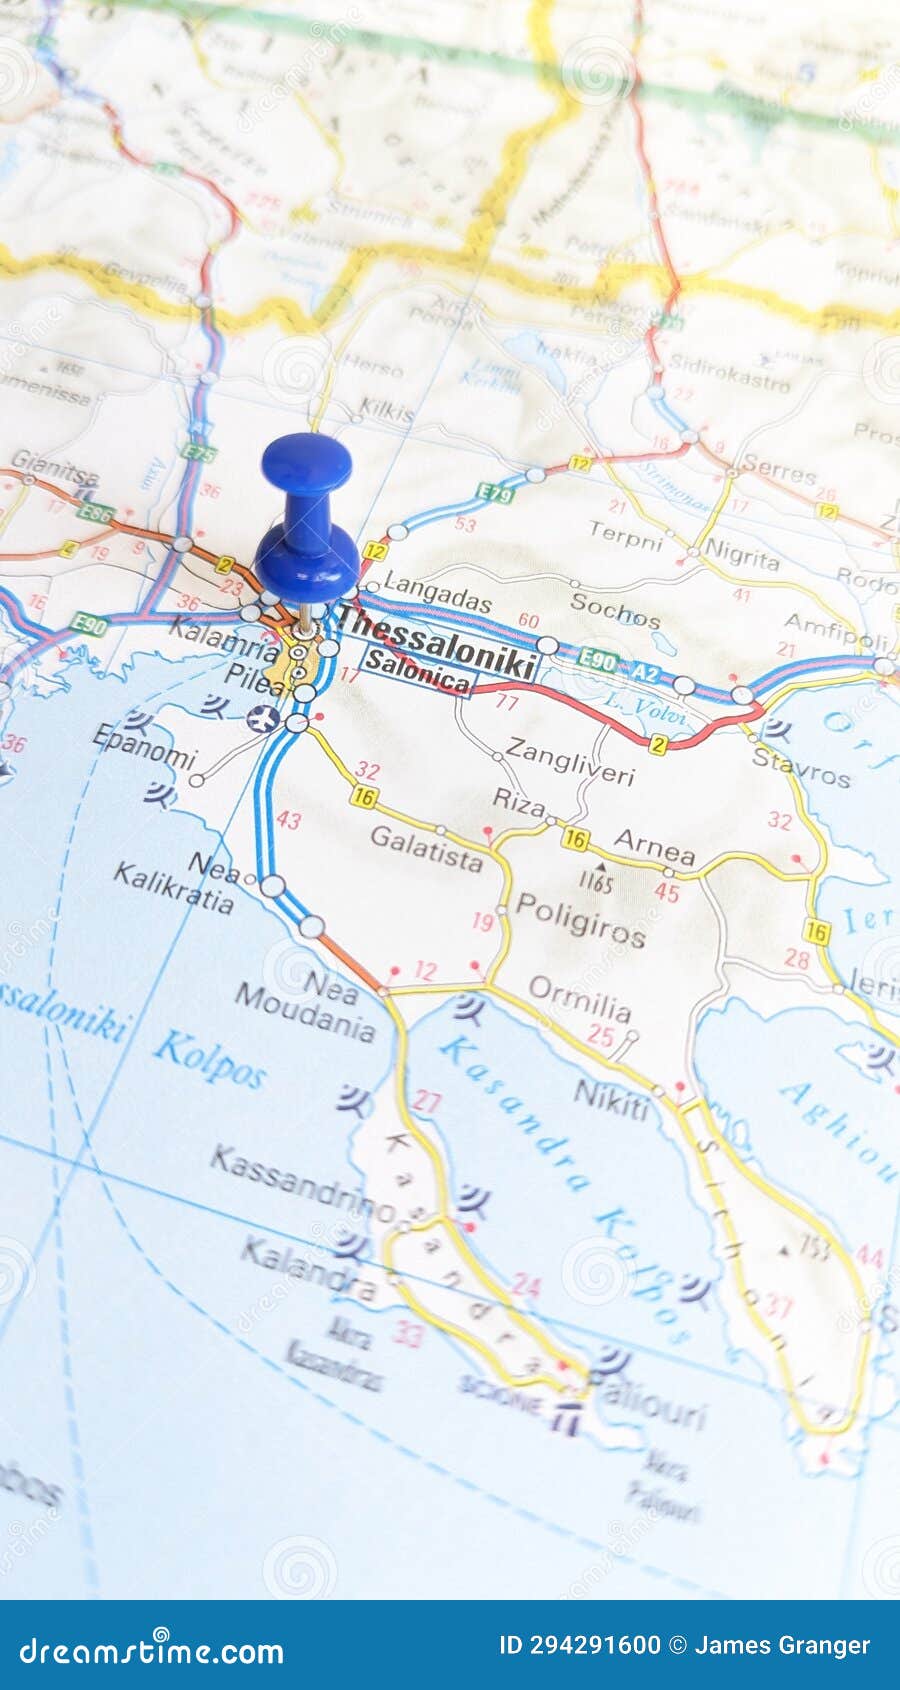 a blue pin stuck in thessaloniki on a map of greece portrait